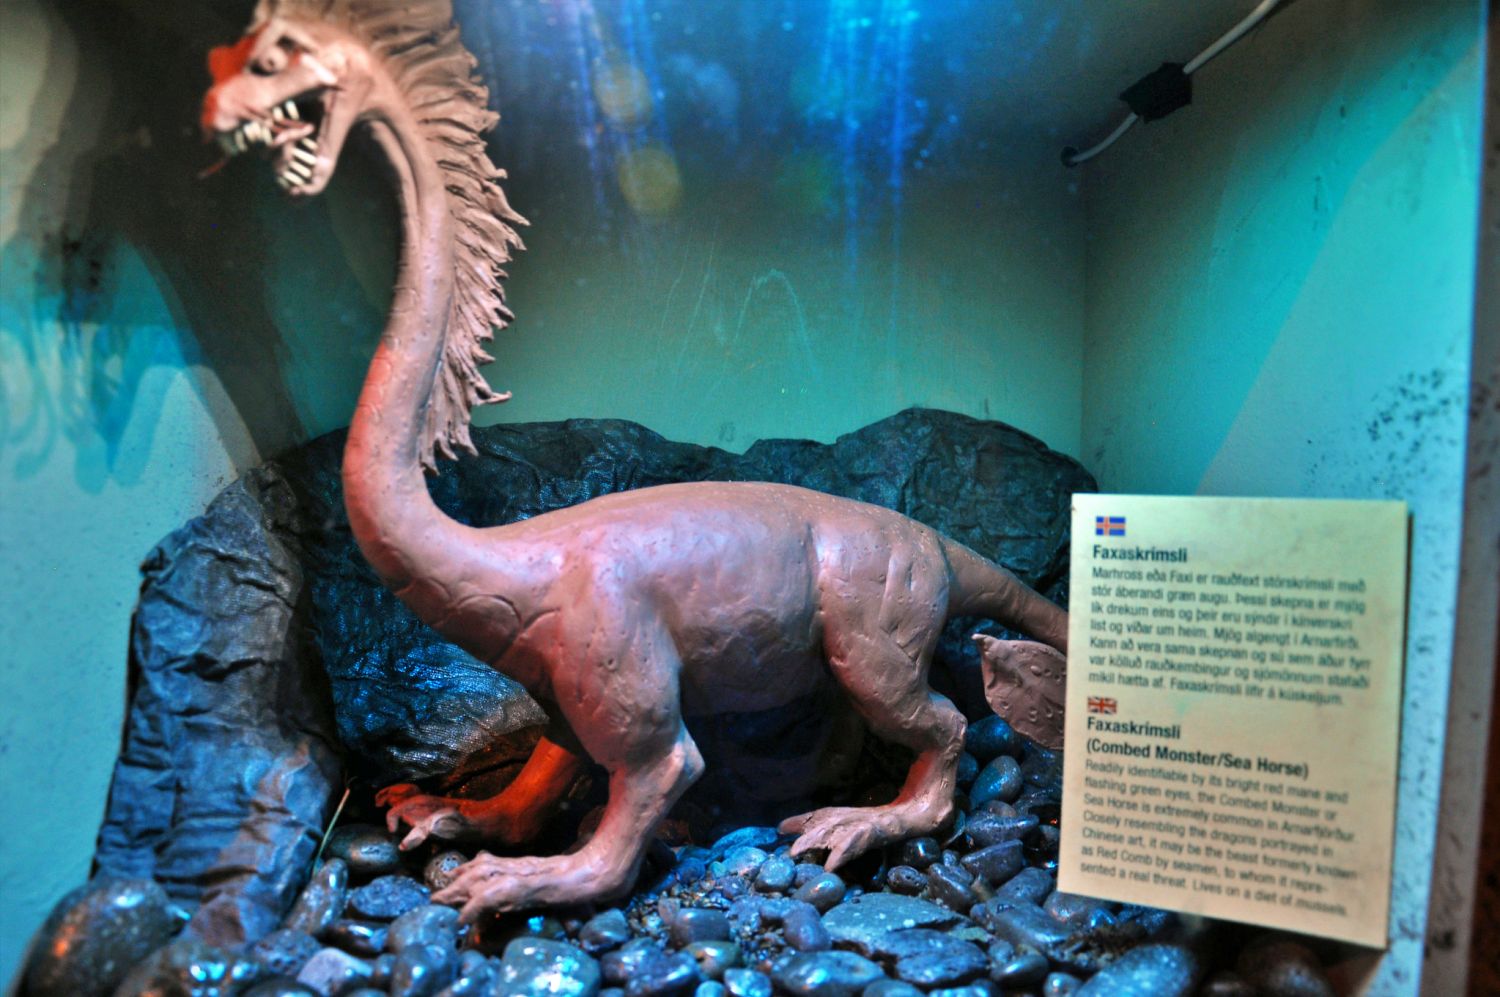 Sea Monster Museum - Faxaskrímsli - Combed Monster/Sea Horse